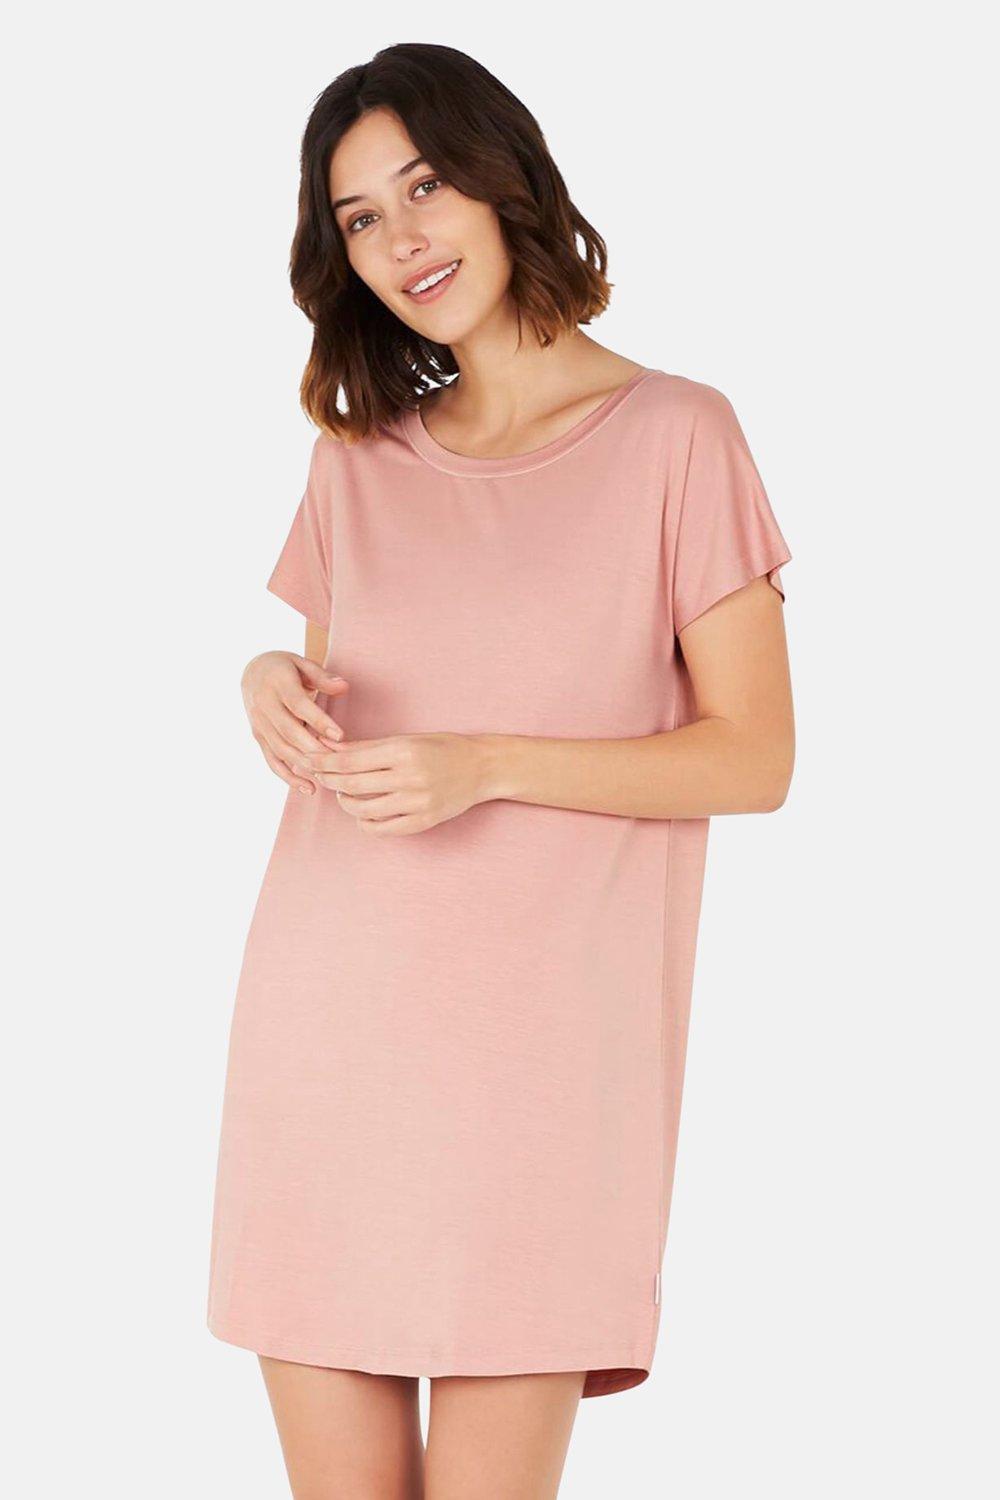 BOODY Women's Goodnight Night Dress|Size: XL|dusty pink